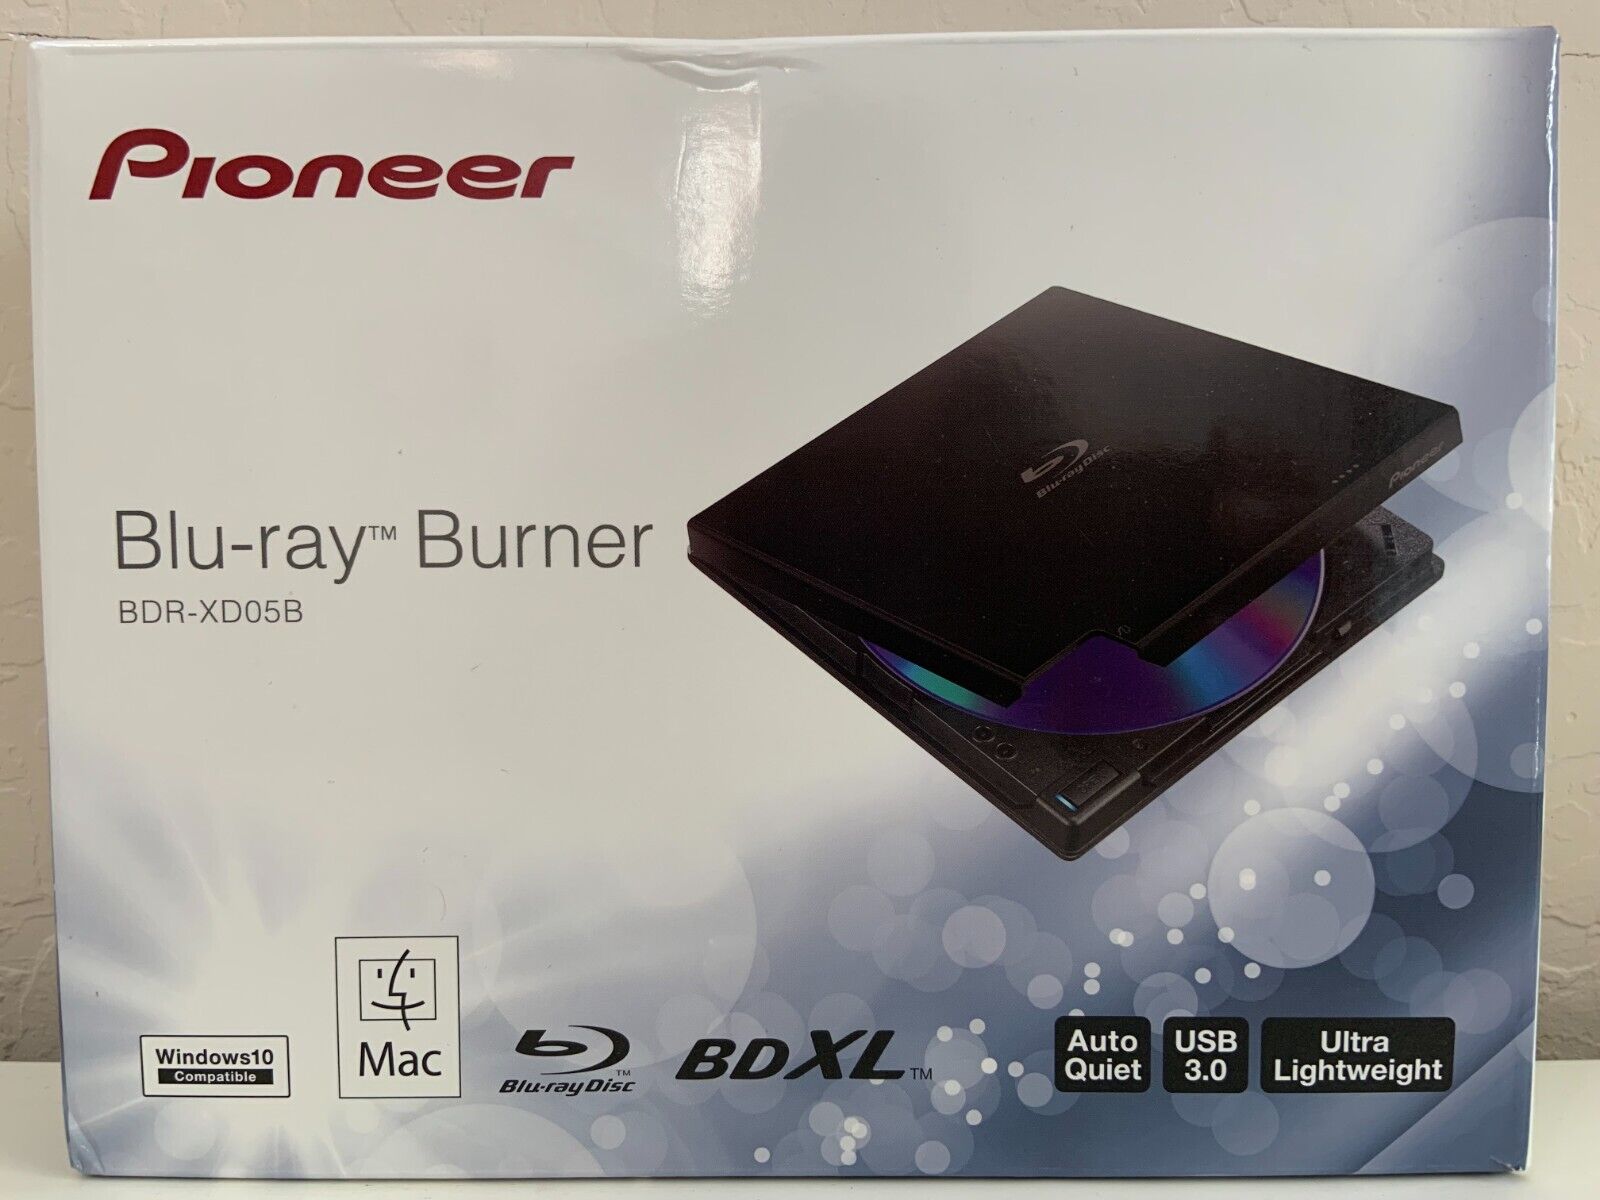 Pioneer BDR-XD05B 6X Slim Portable USB 3.0 Blu-Ray Burner (Black) - Supports BDX